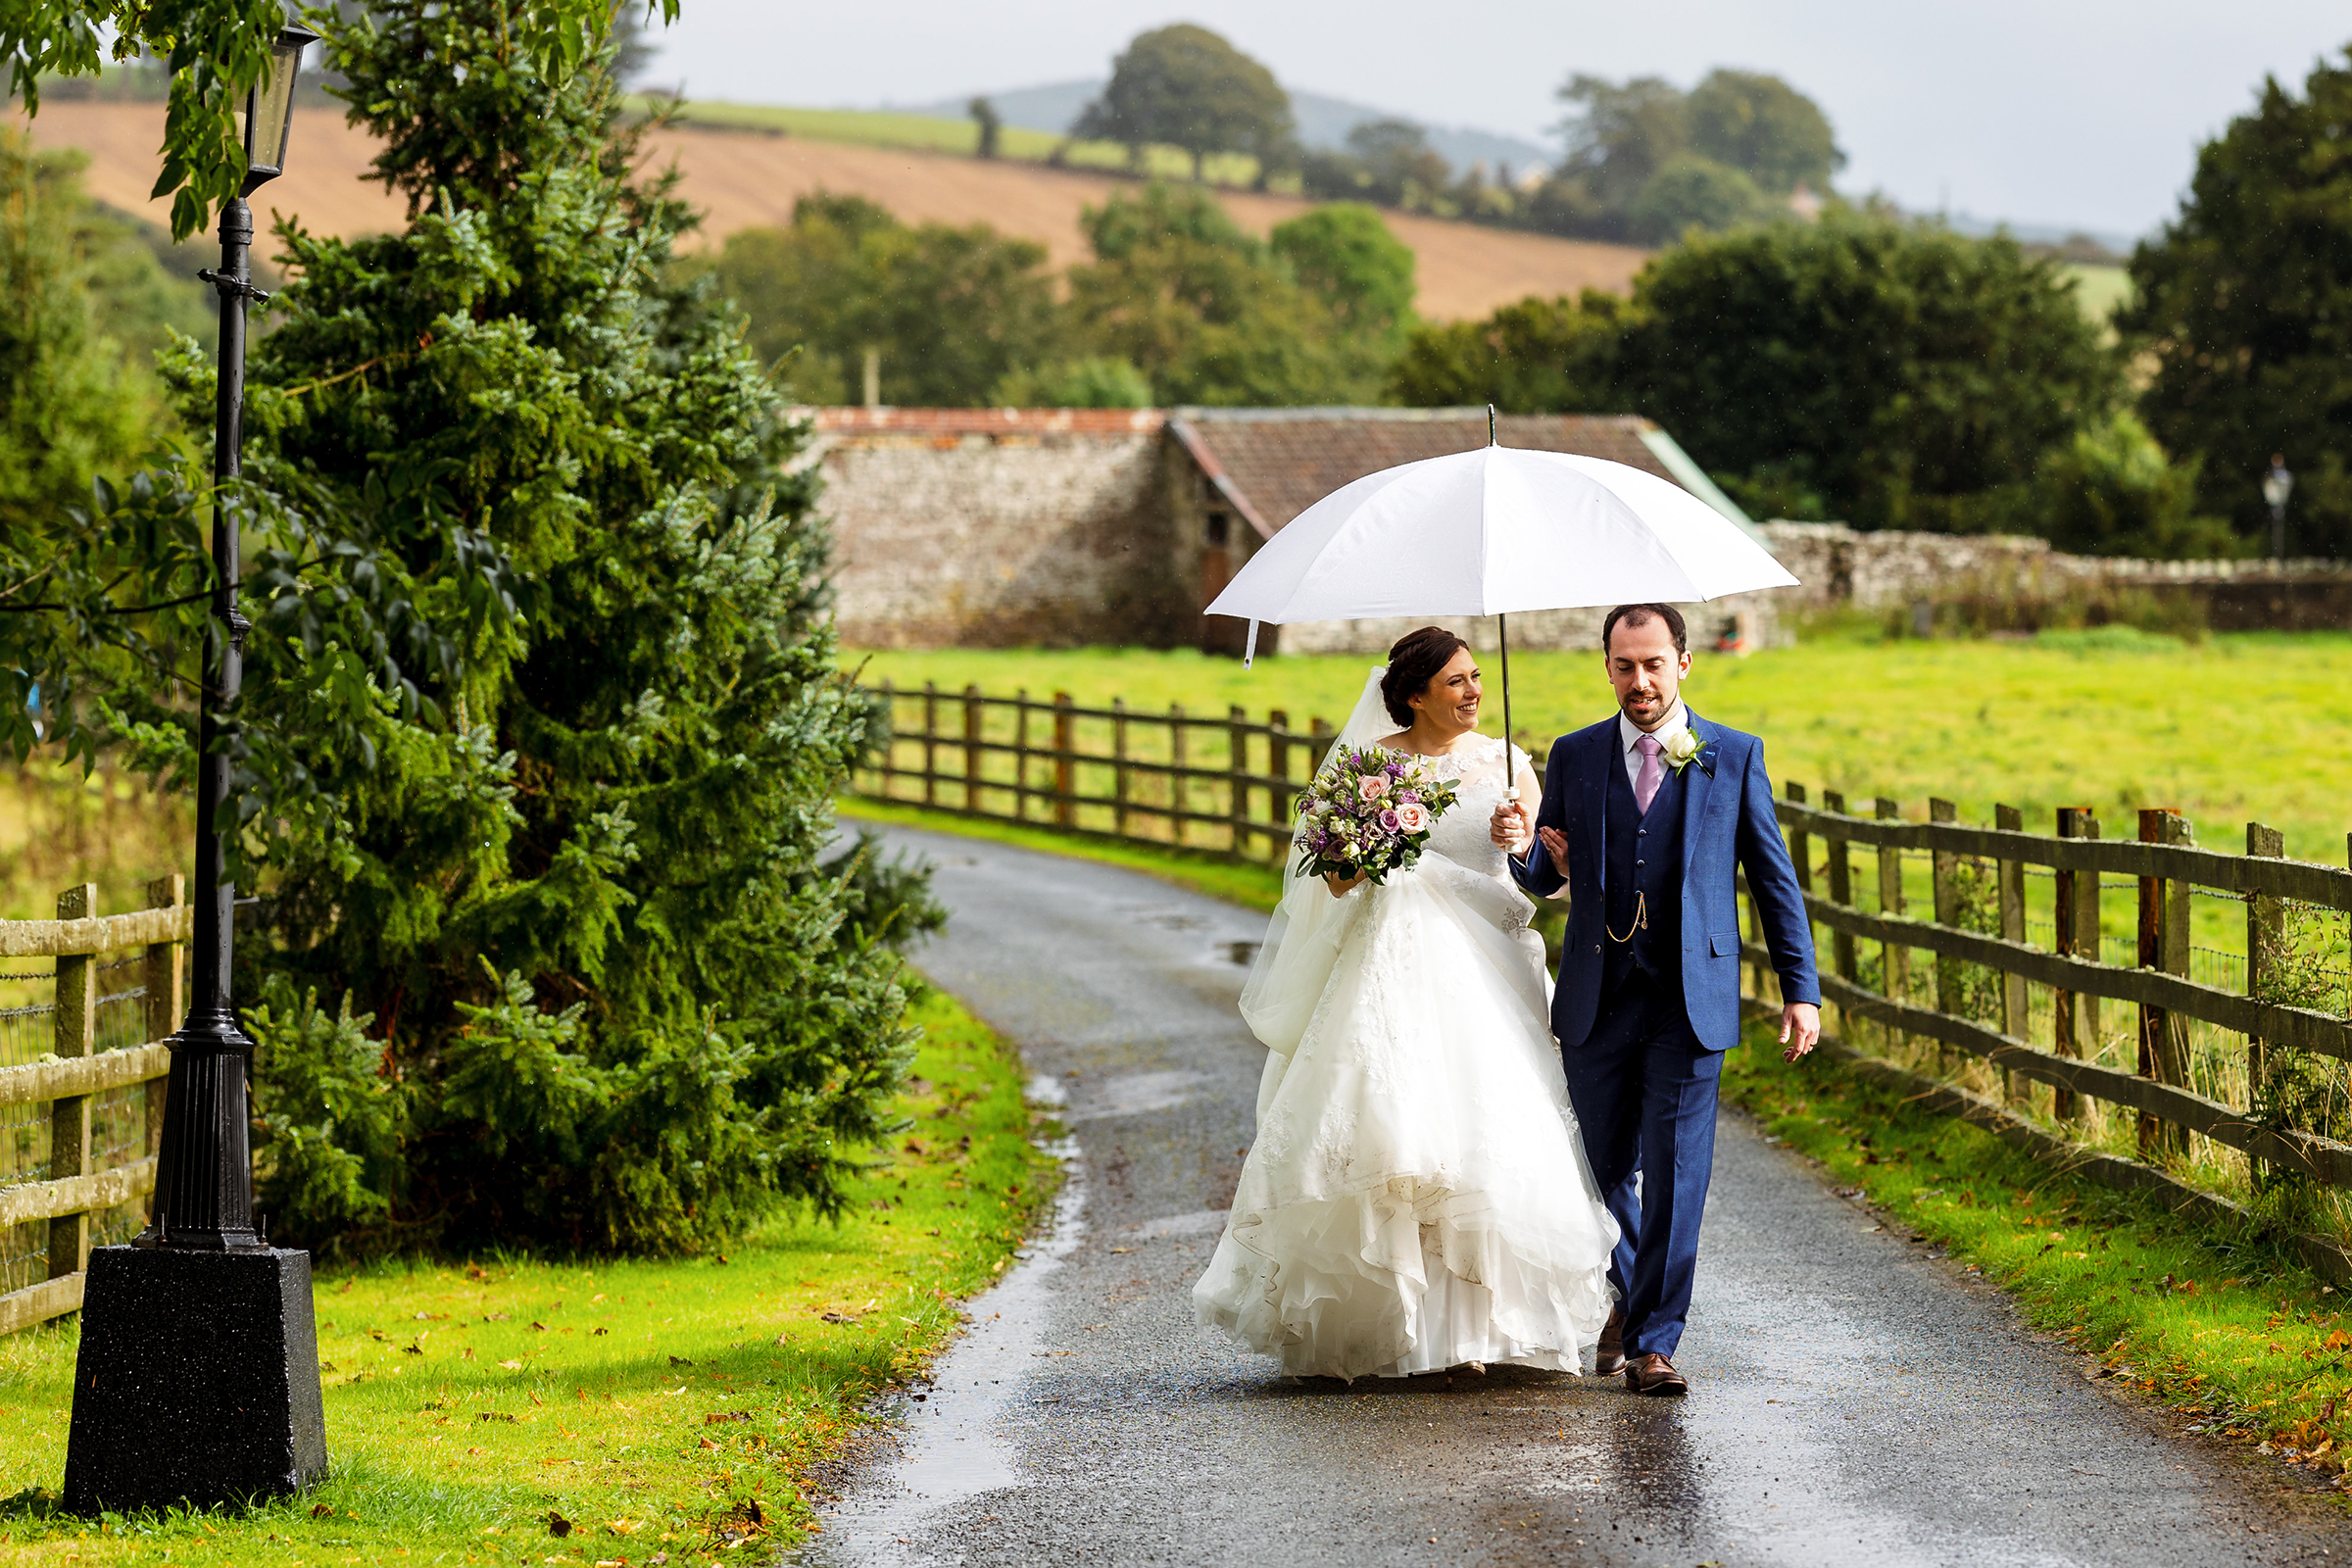 Peterstone Court Wedding - Bride and groom in rain